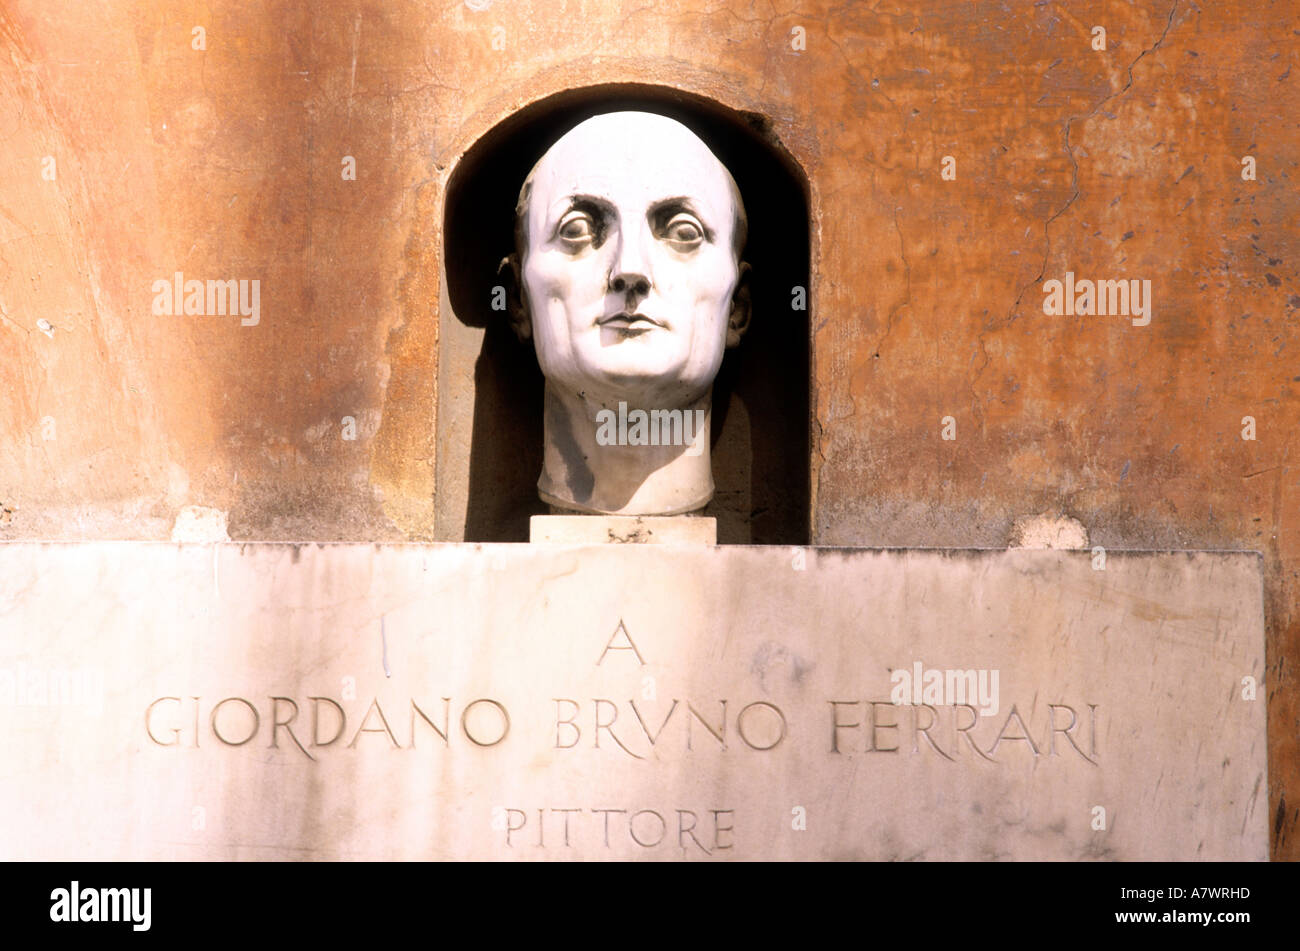 Italien, Latium, Rom, Statue von Giordano Bruno Ferrari Maler in Margutta Straße Stockfoto